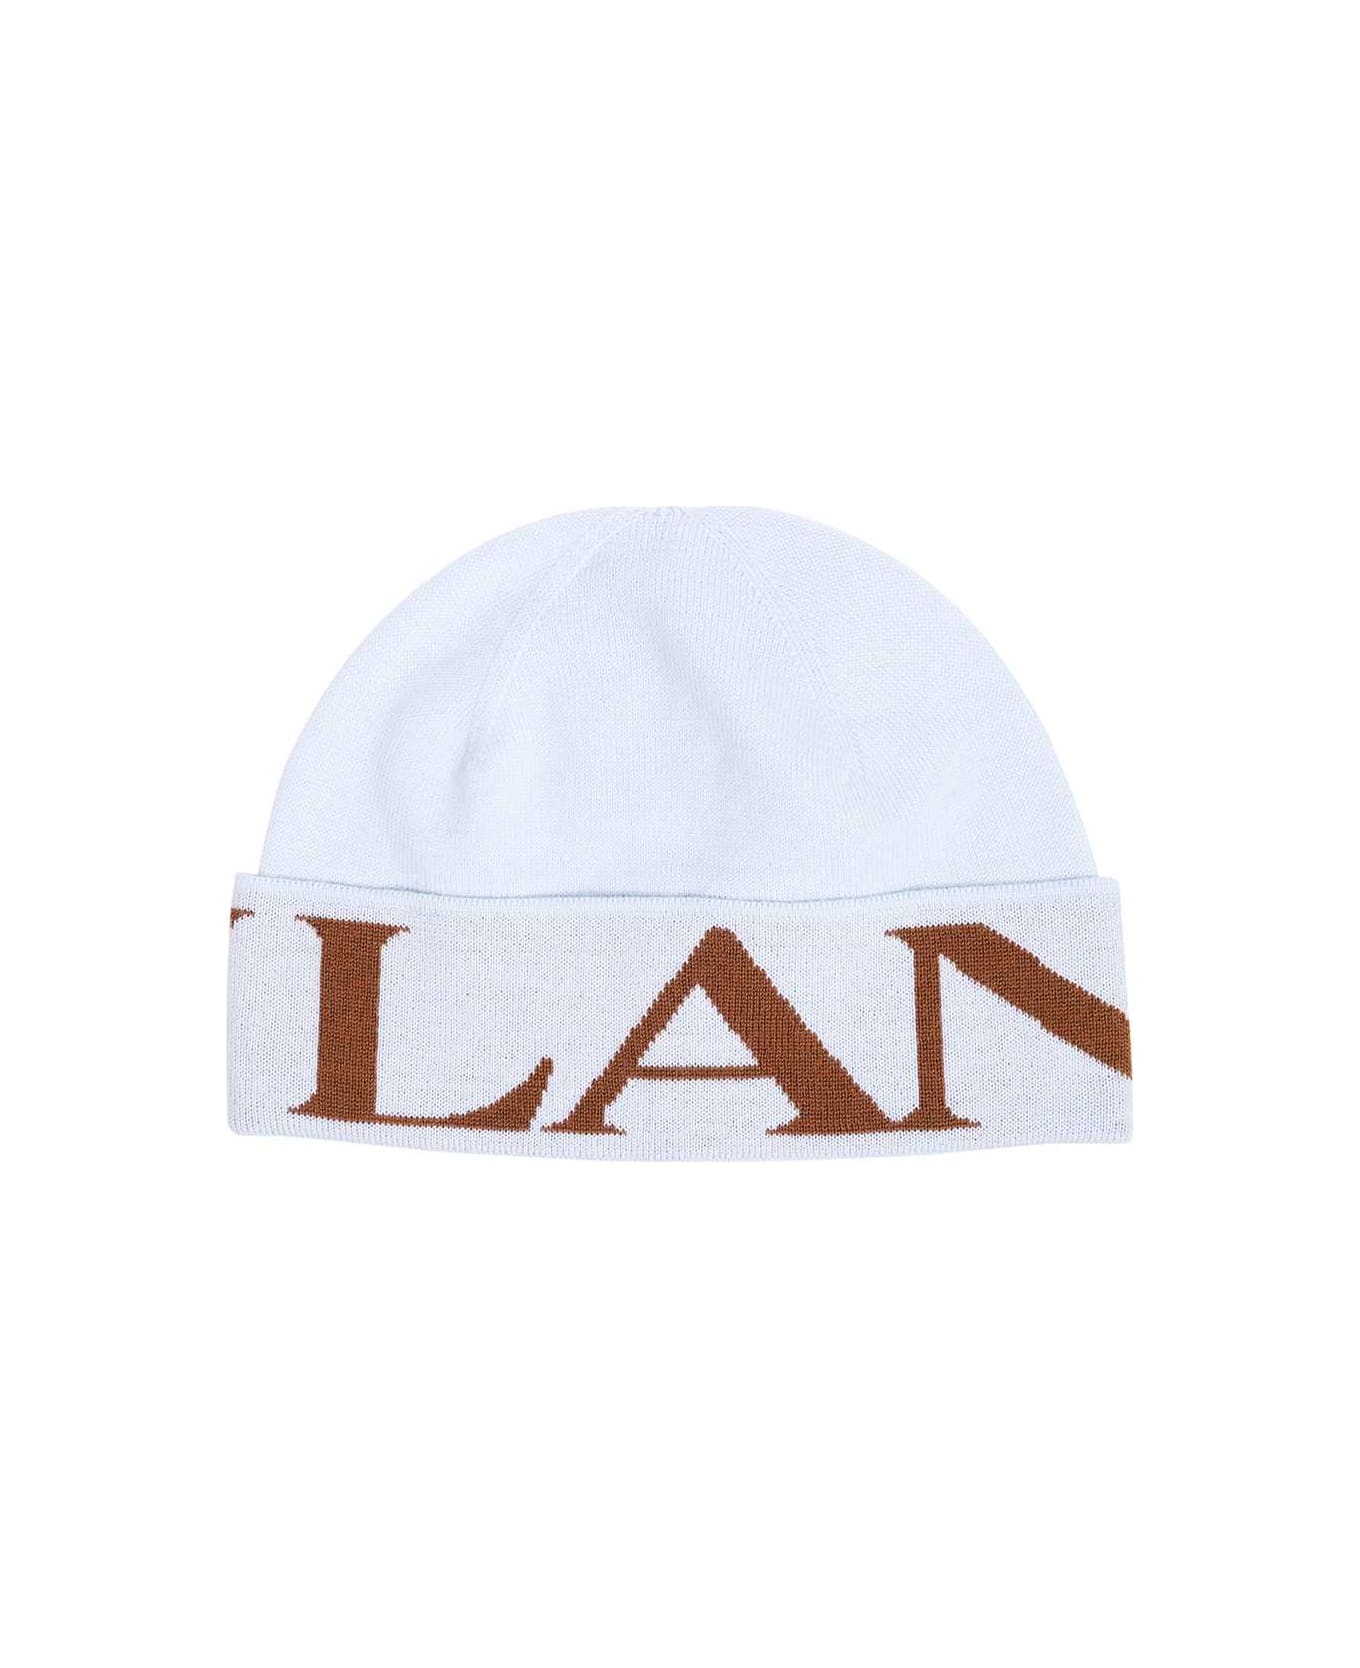 Lanvin Wool Hat - Light Blue 帽子